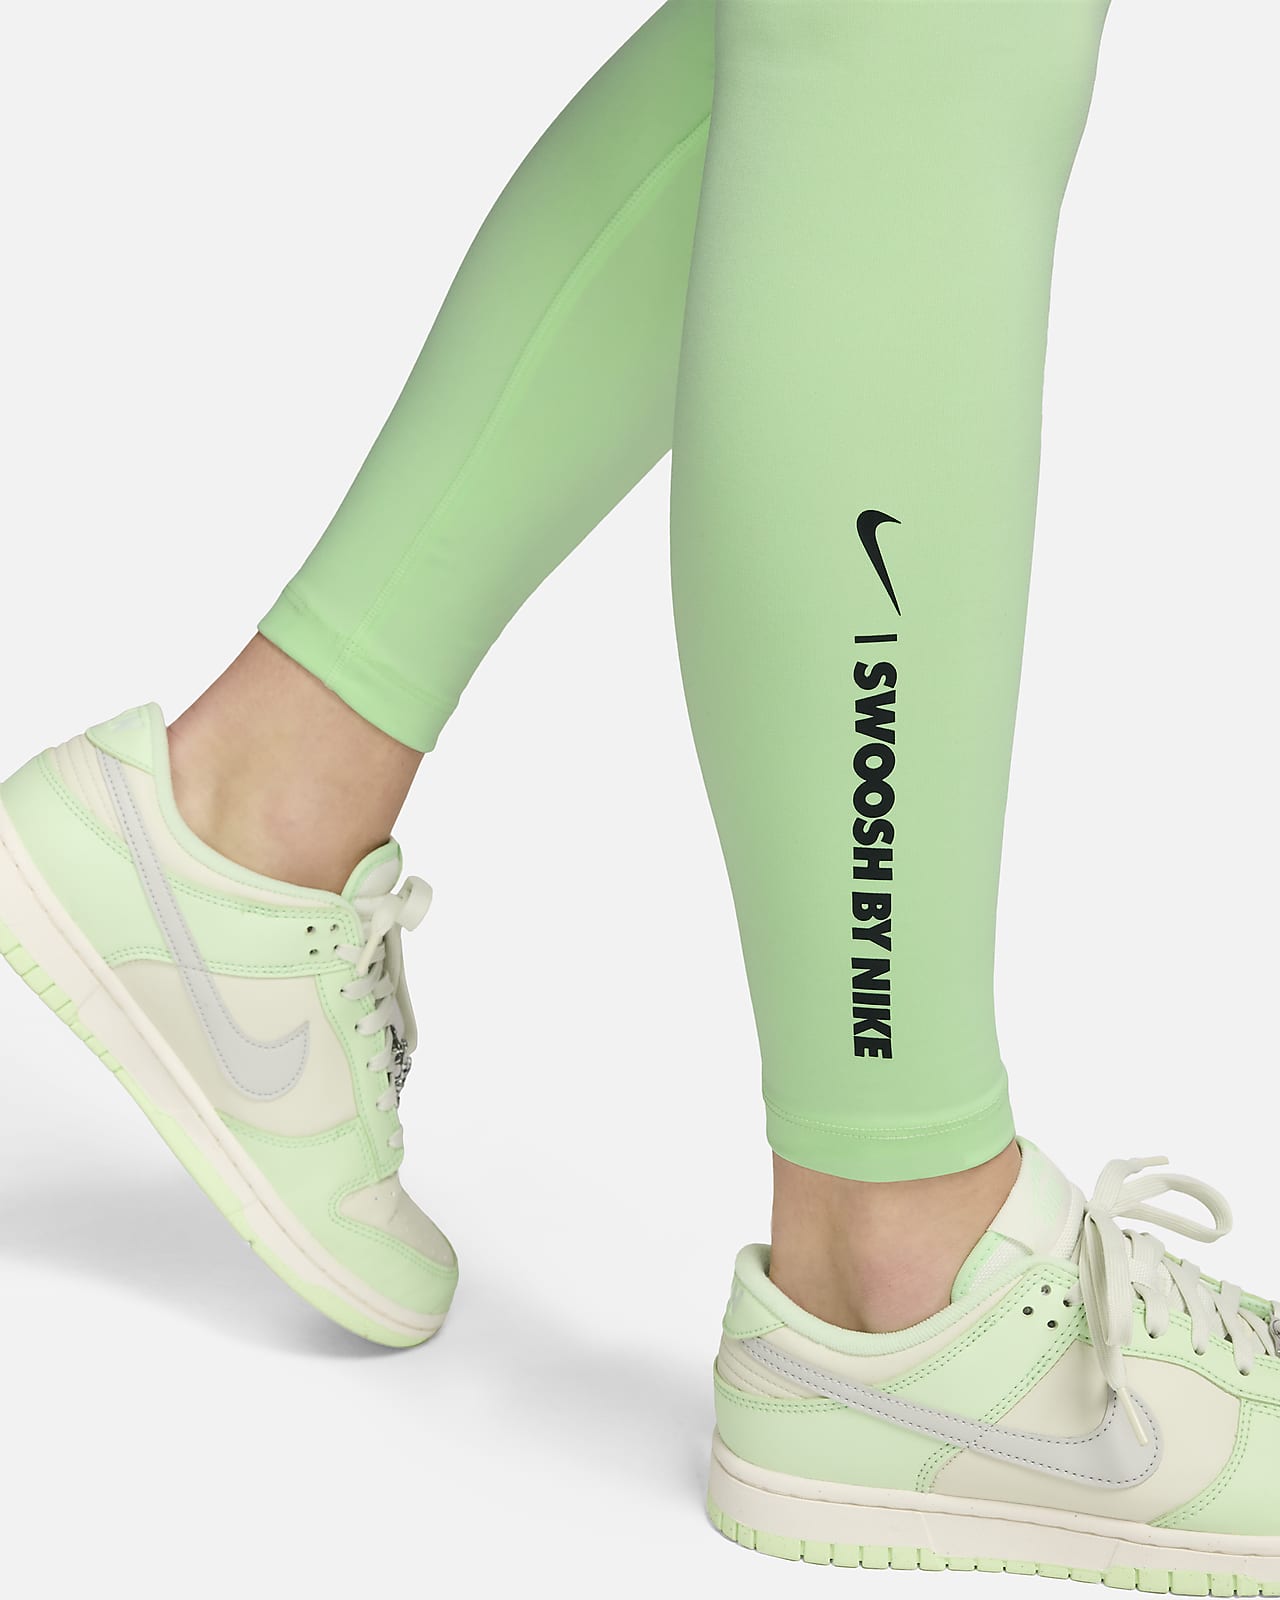 Nike Performance Damen Leggings in dunkelgrau bestellen - 18677601